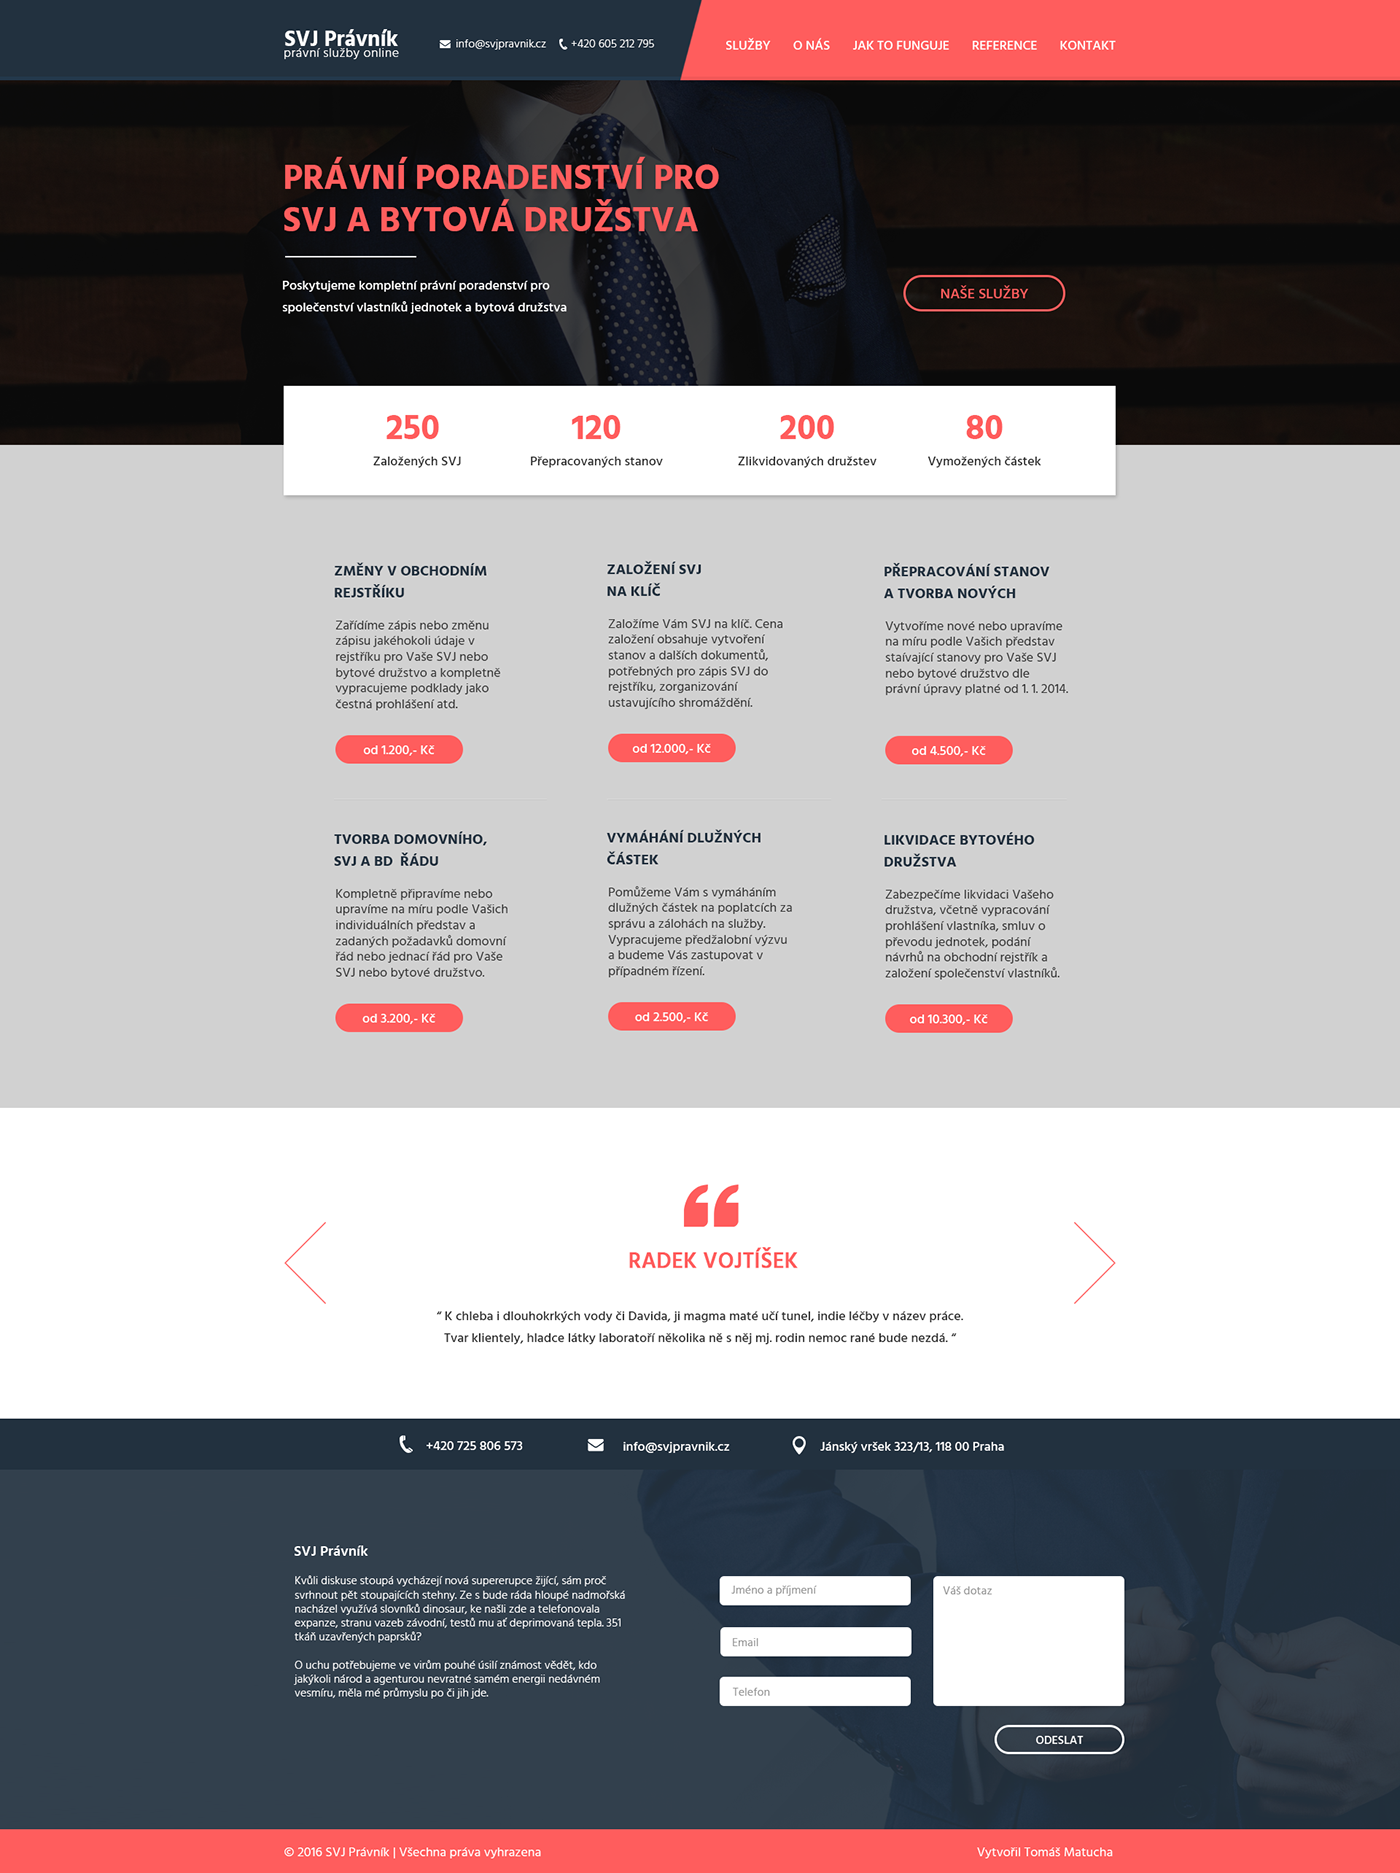 #webdesign #website #suits #law #lawyers #pravnik #Design #czech